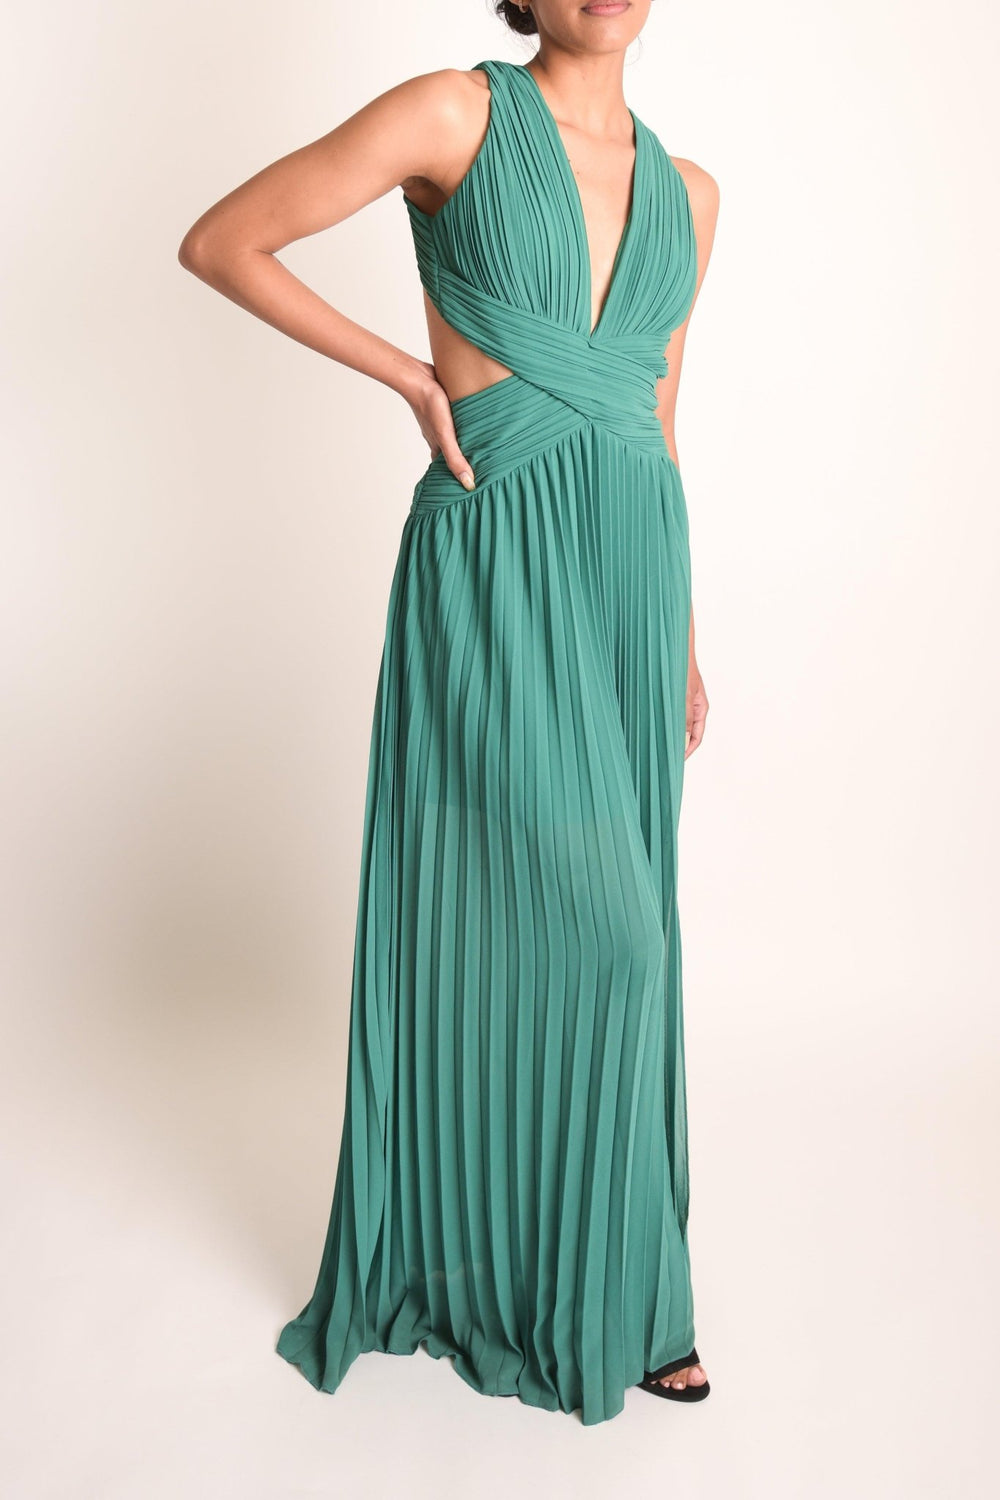 Velma - verde - Lend the Trend renta de vestidos mexico